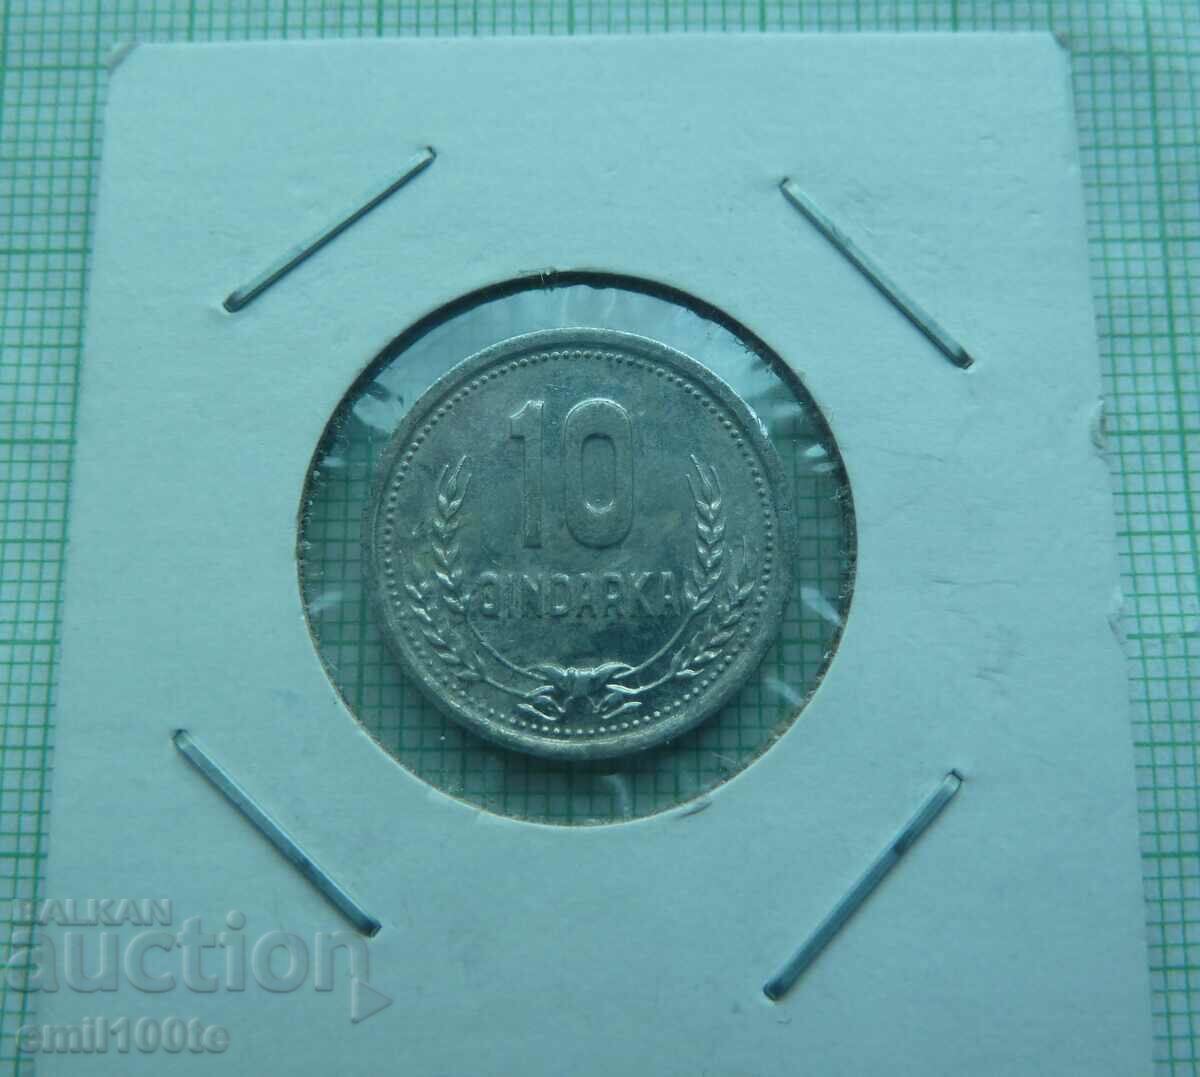 10 kindarki 1988. Albania aluminiu